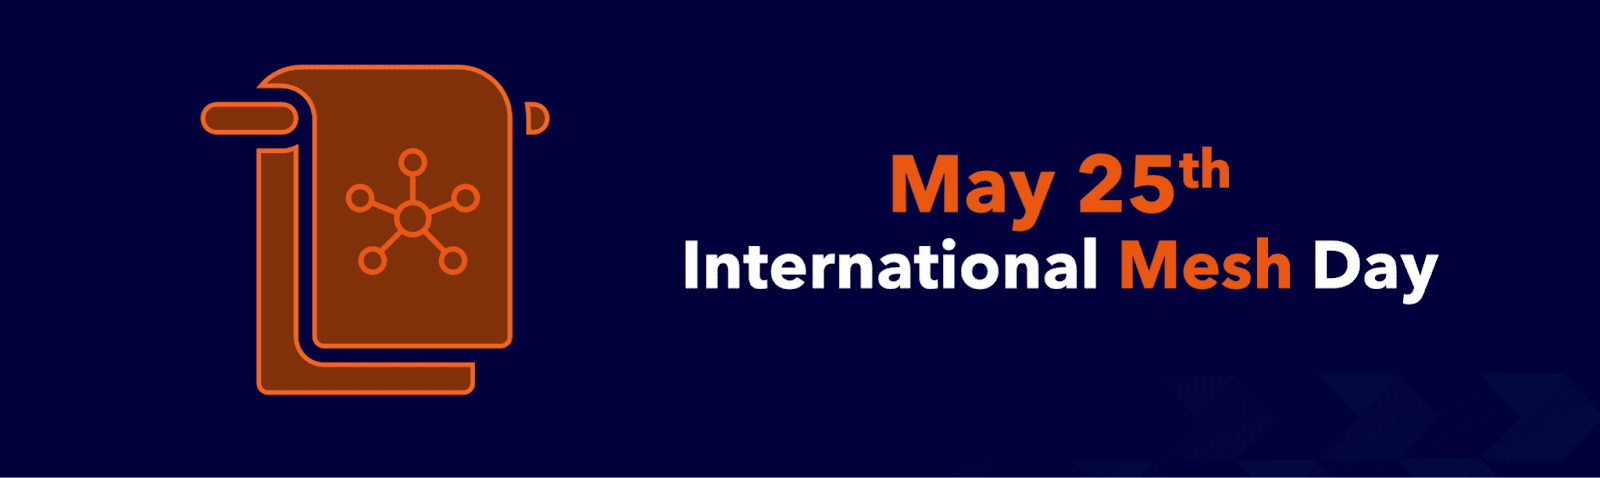 May 25th International Mesh Day